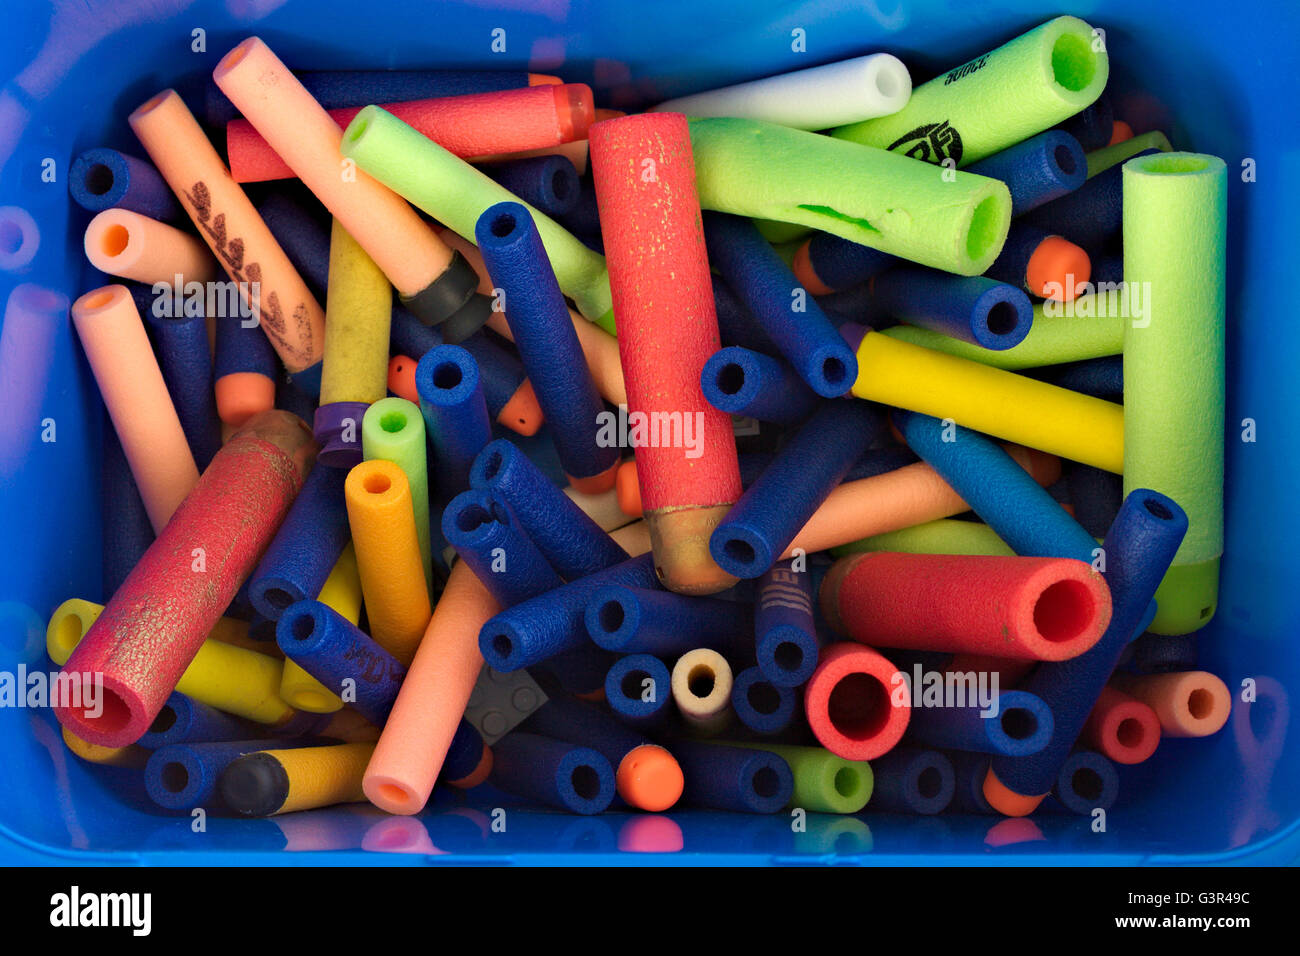 Foam toy Nerf gun darts in multiple colors in a blue box. Stock Photo